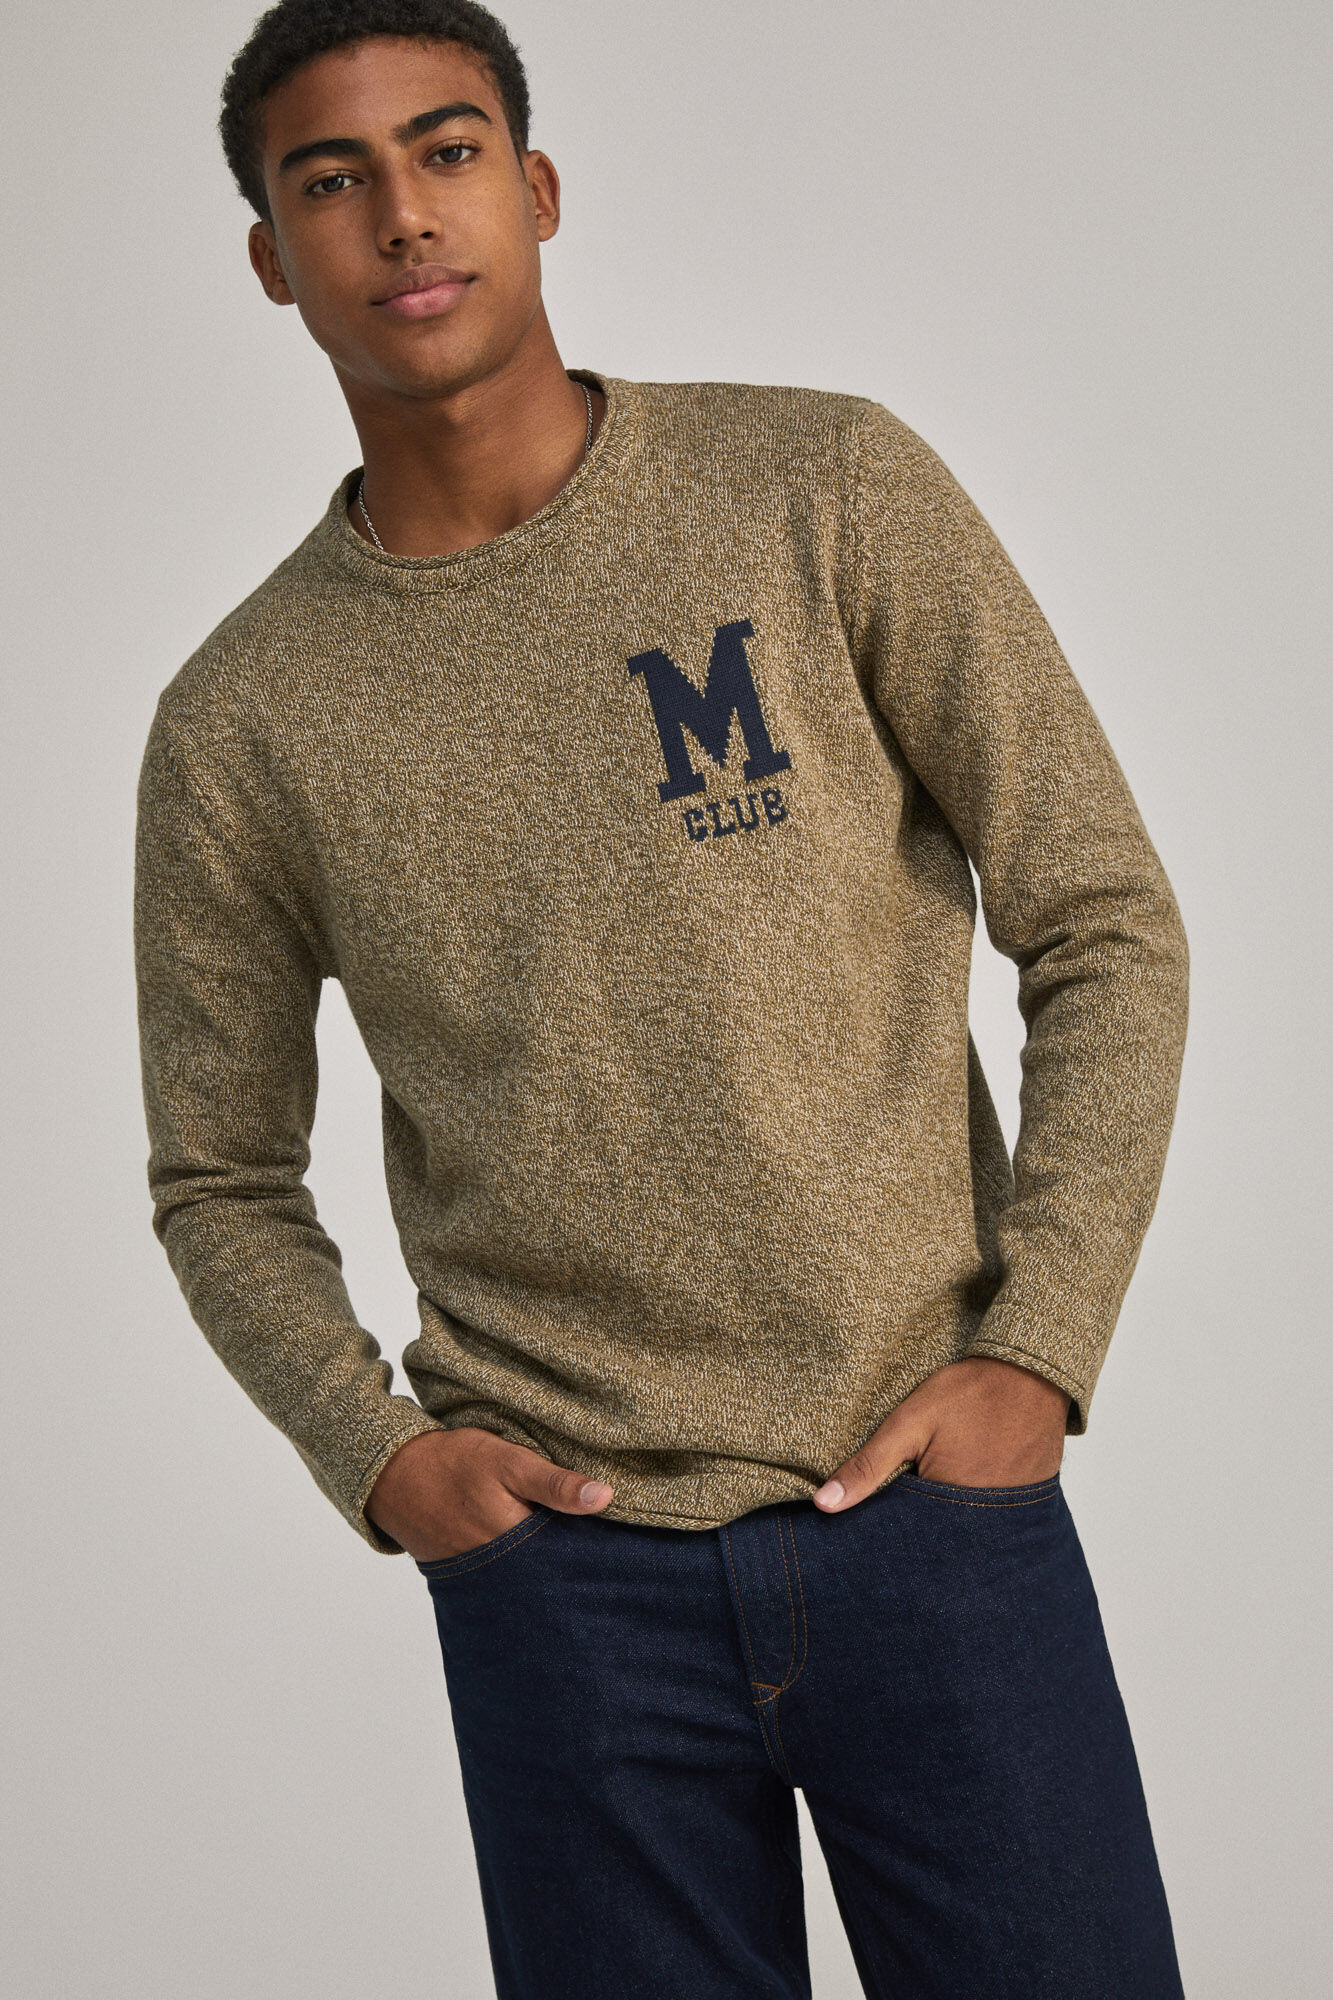 MEN FASHION Jumpers & Sweatshirts Print Multicolored M Springfield jumper discount 70% 